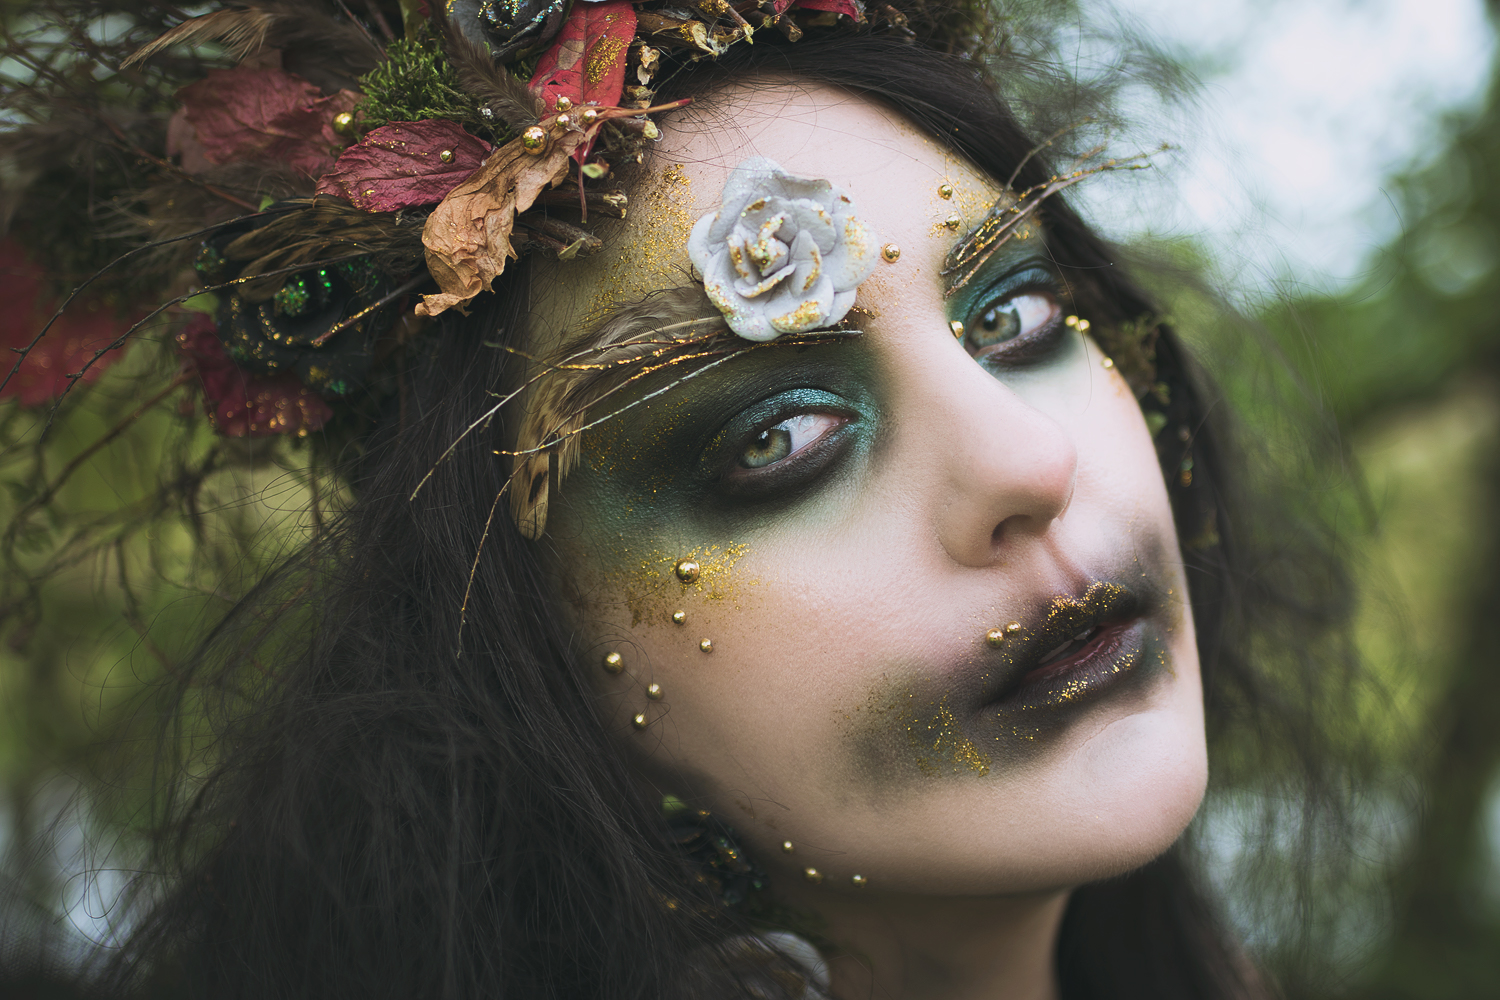 motd halloween makeup halloweensminkning lady forest creature nymph